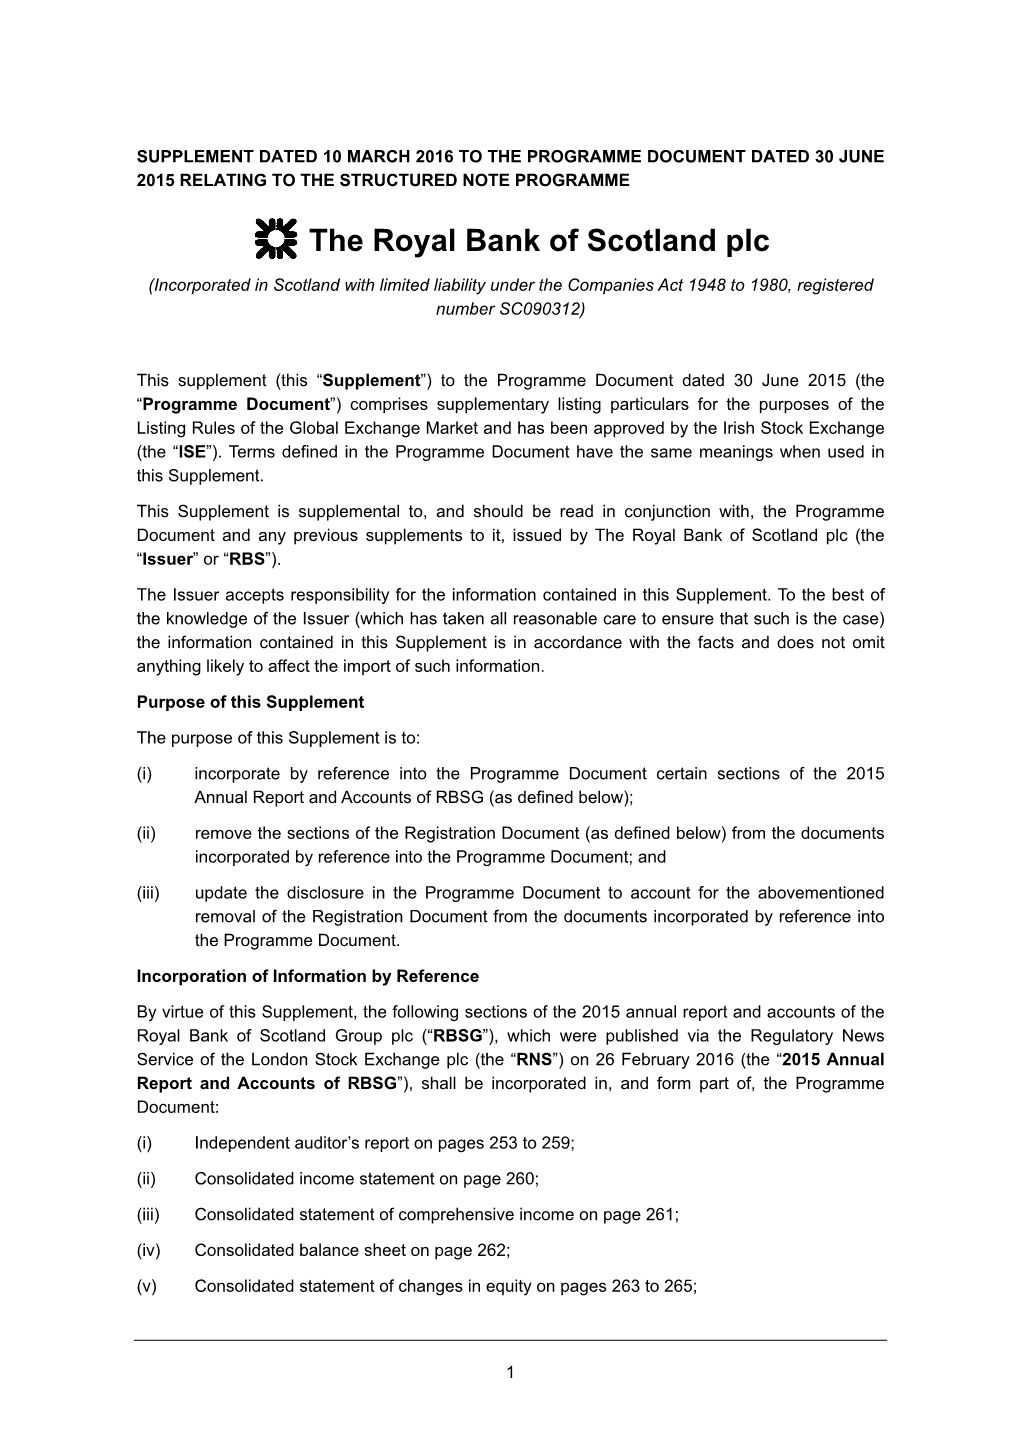 The Royal Bank of Scotland Plc